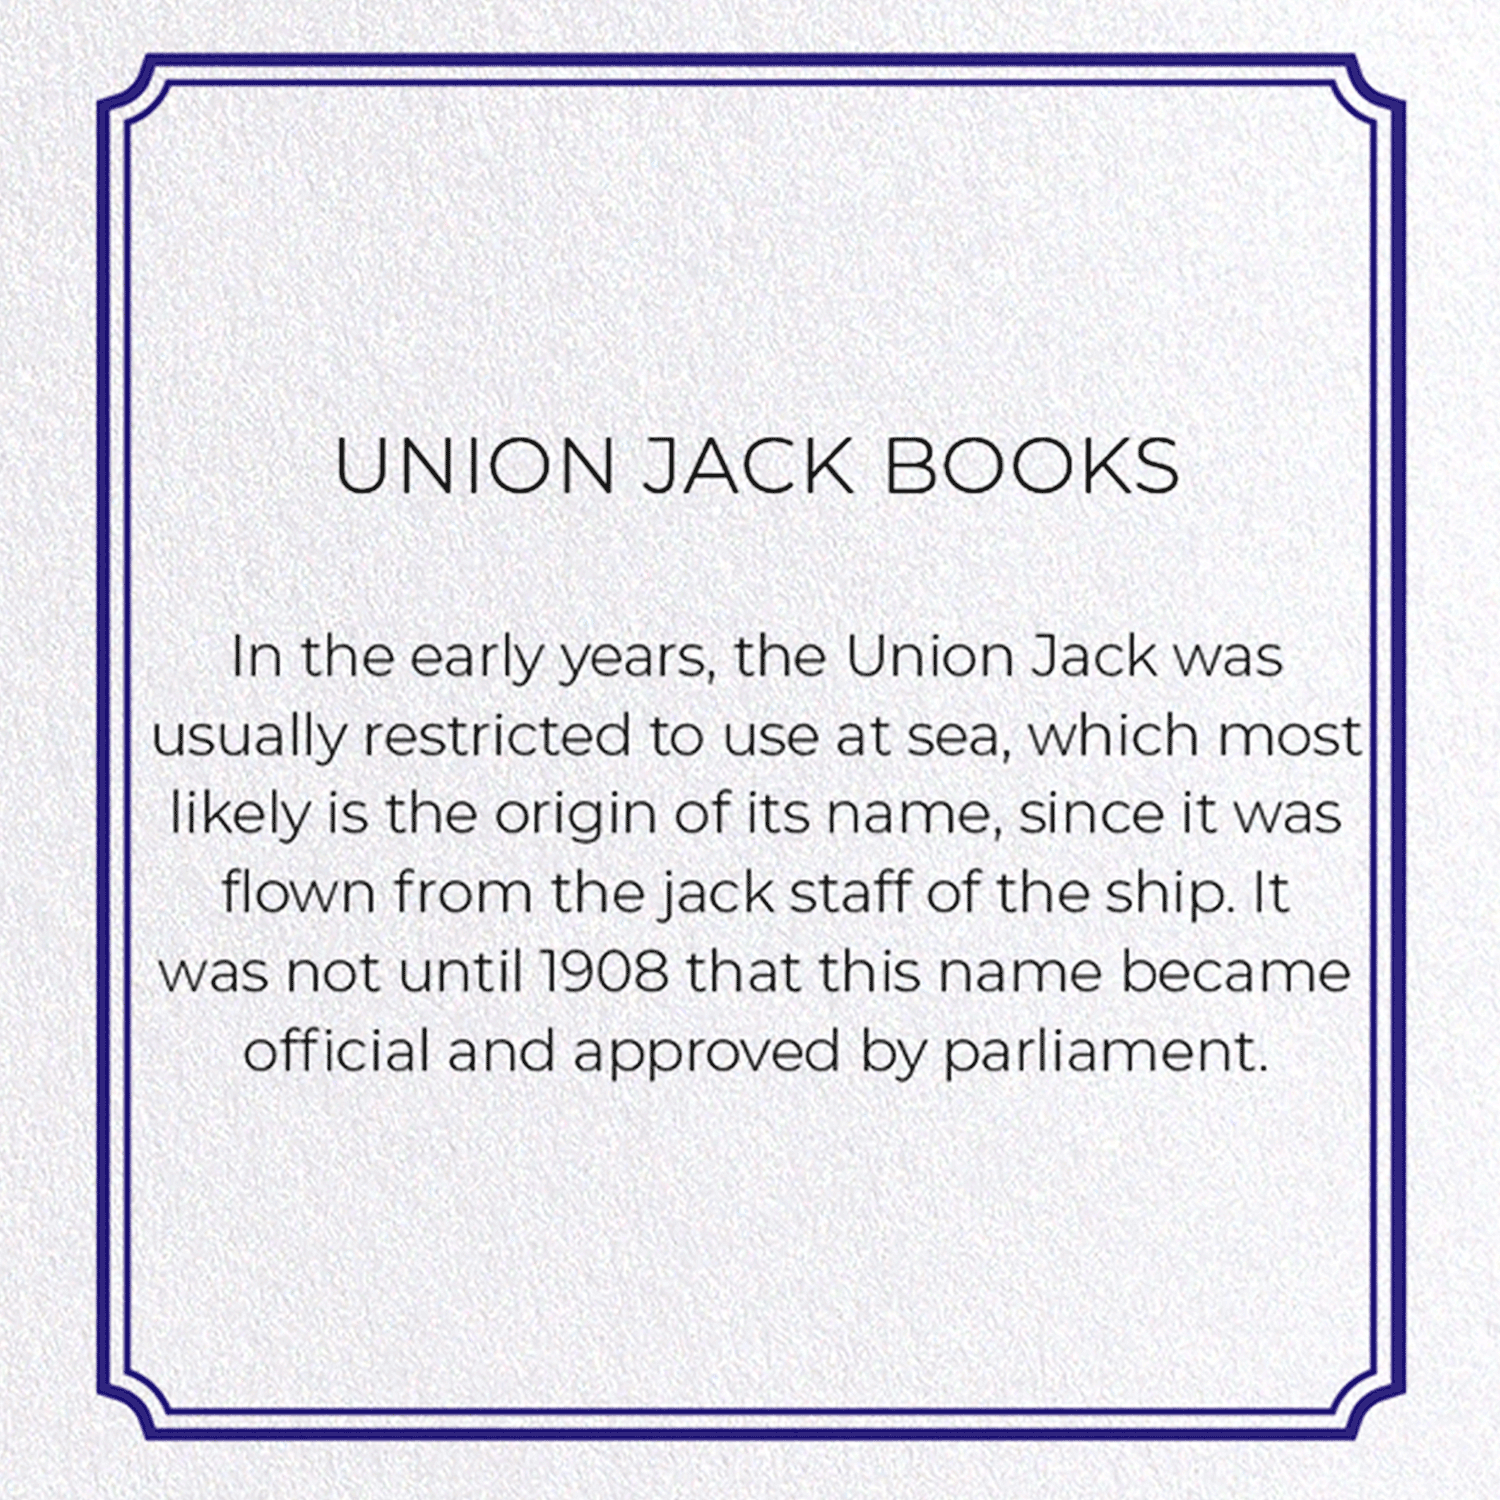 UNION JACK BOOKS